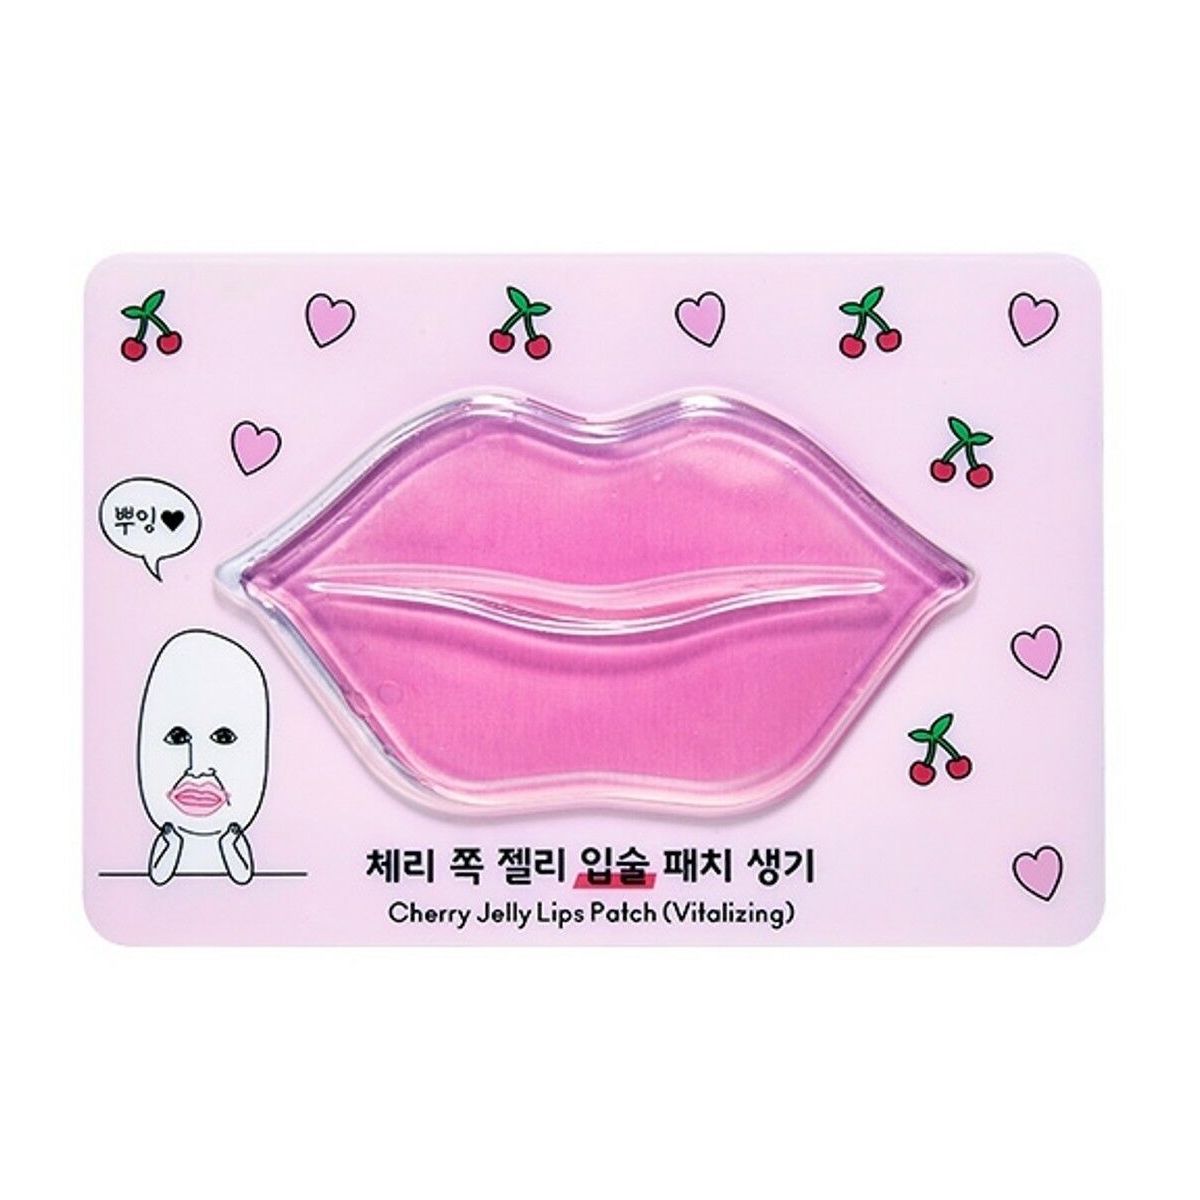 Губ маска для лица. Etude House Cherry Jelly Lips Patch (Vitalizing). Маска губы. Патчи для губ. Бумажная маска для губ.